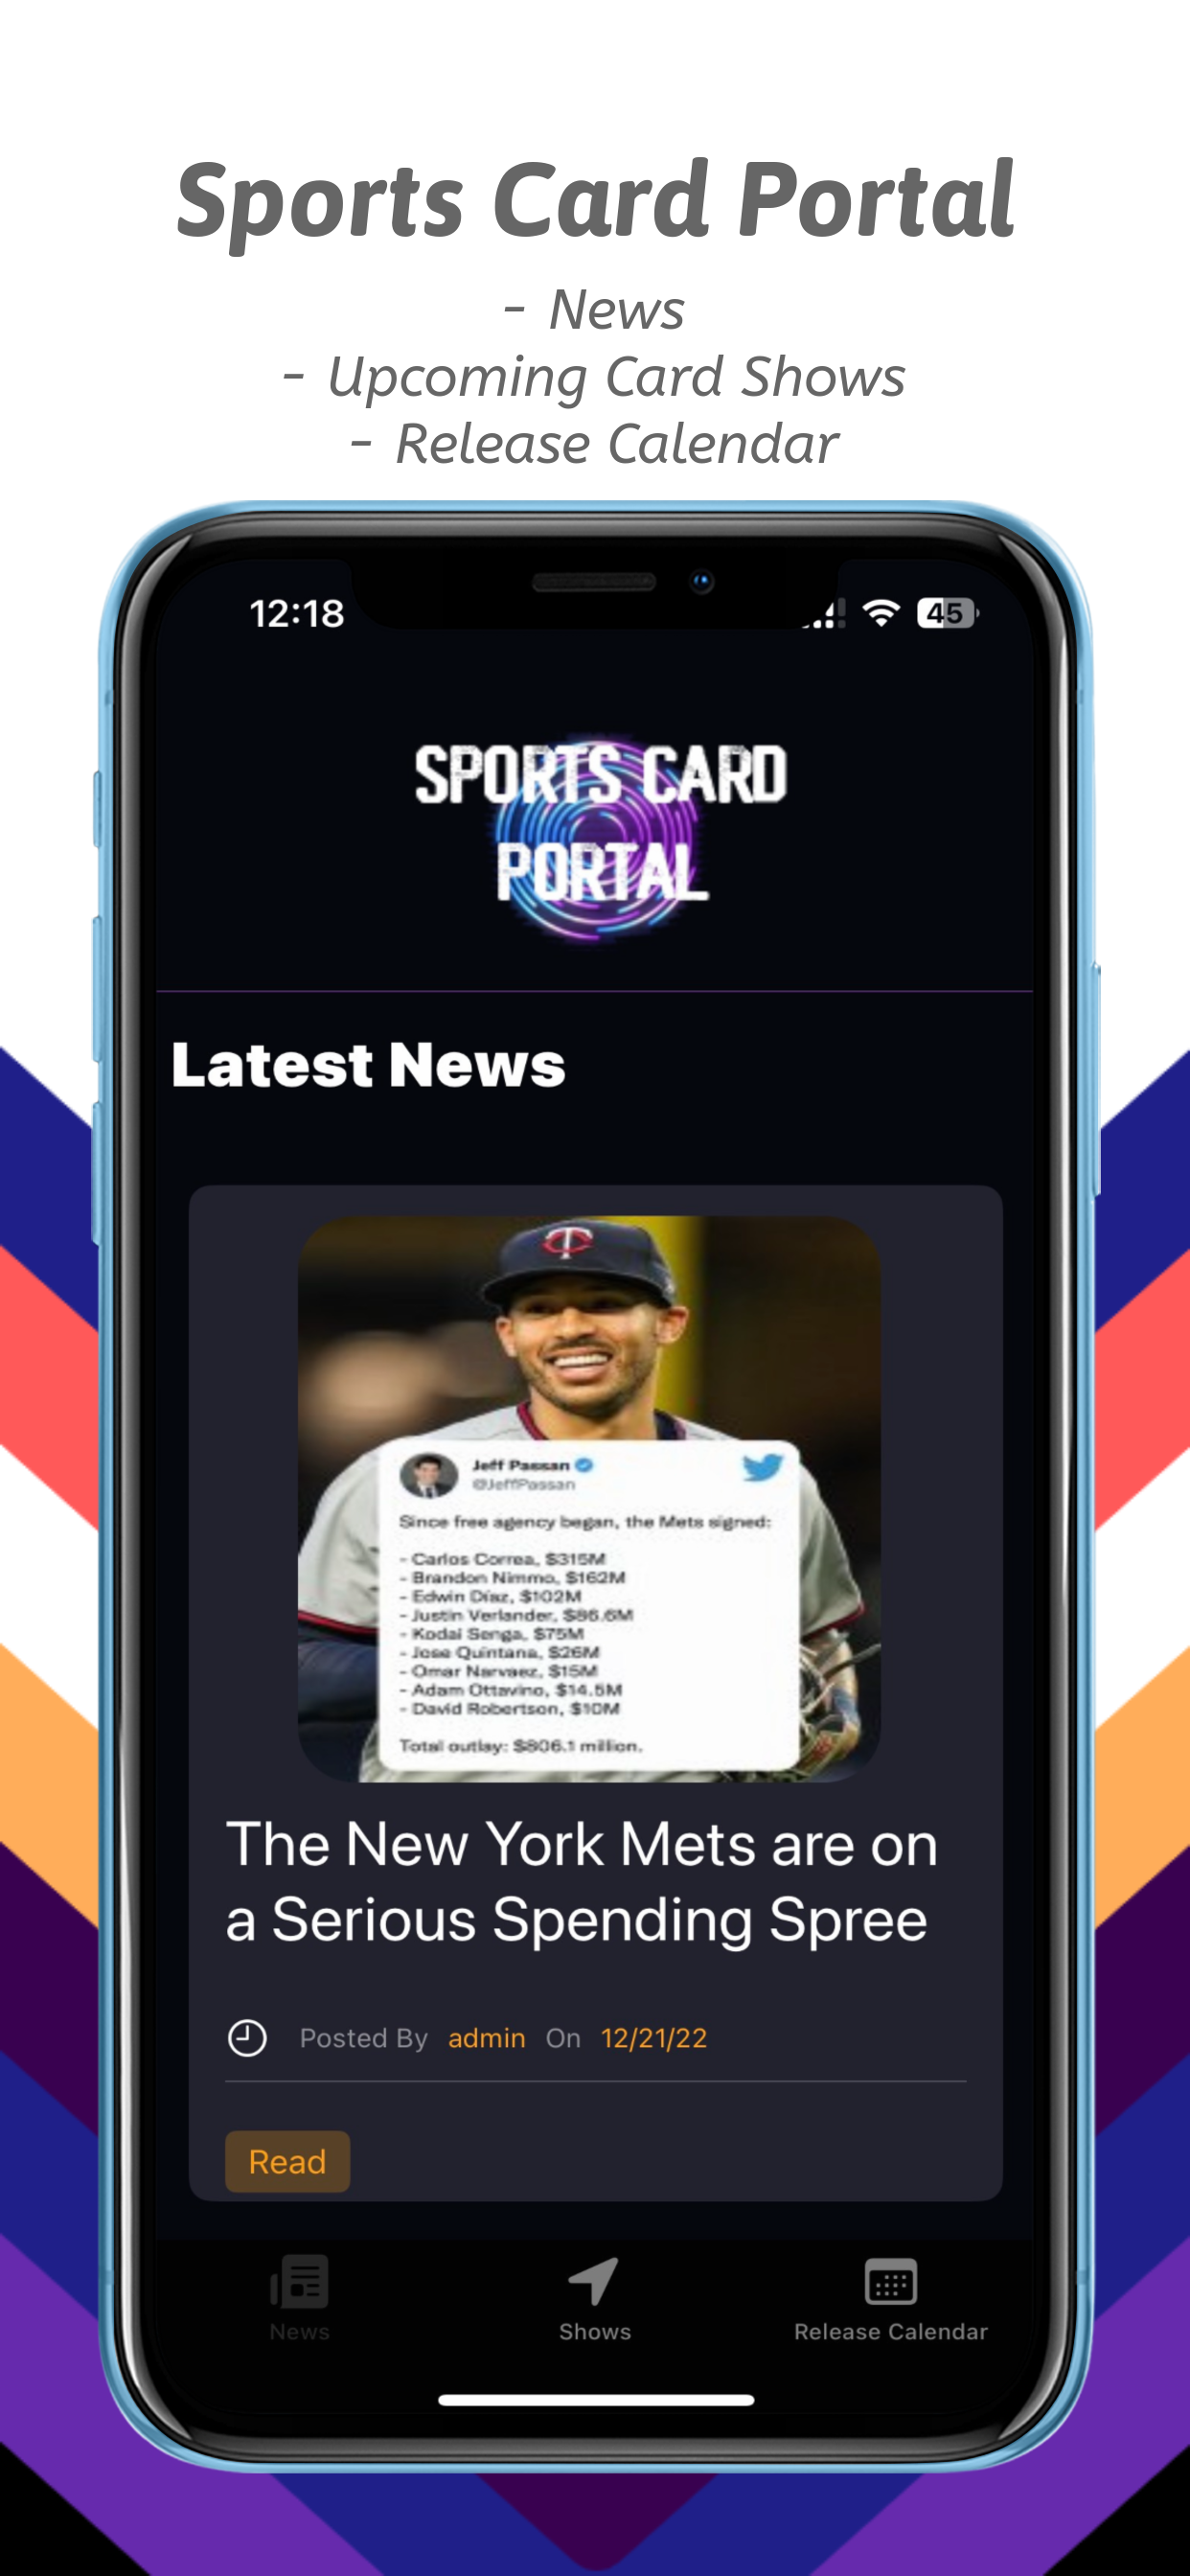 Sports Card Portal App is Here!